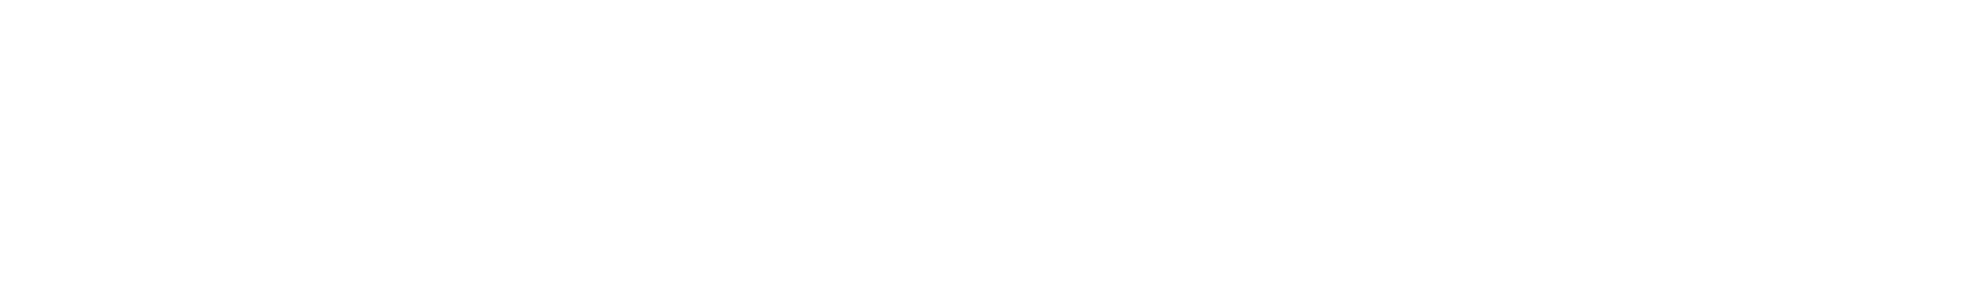 PBA Icons and Graphics_white stars